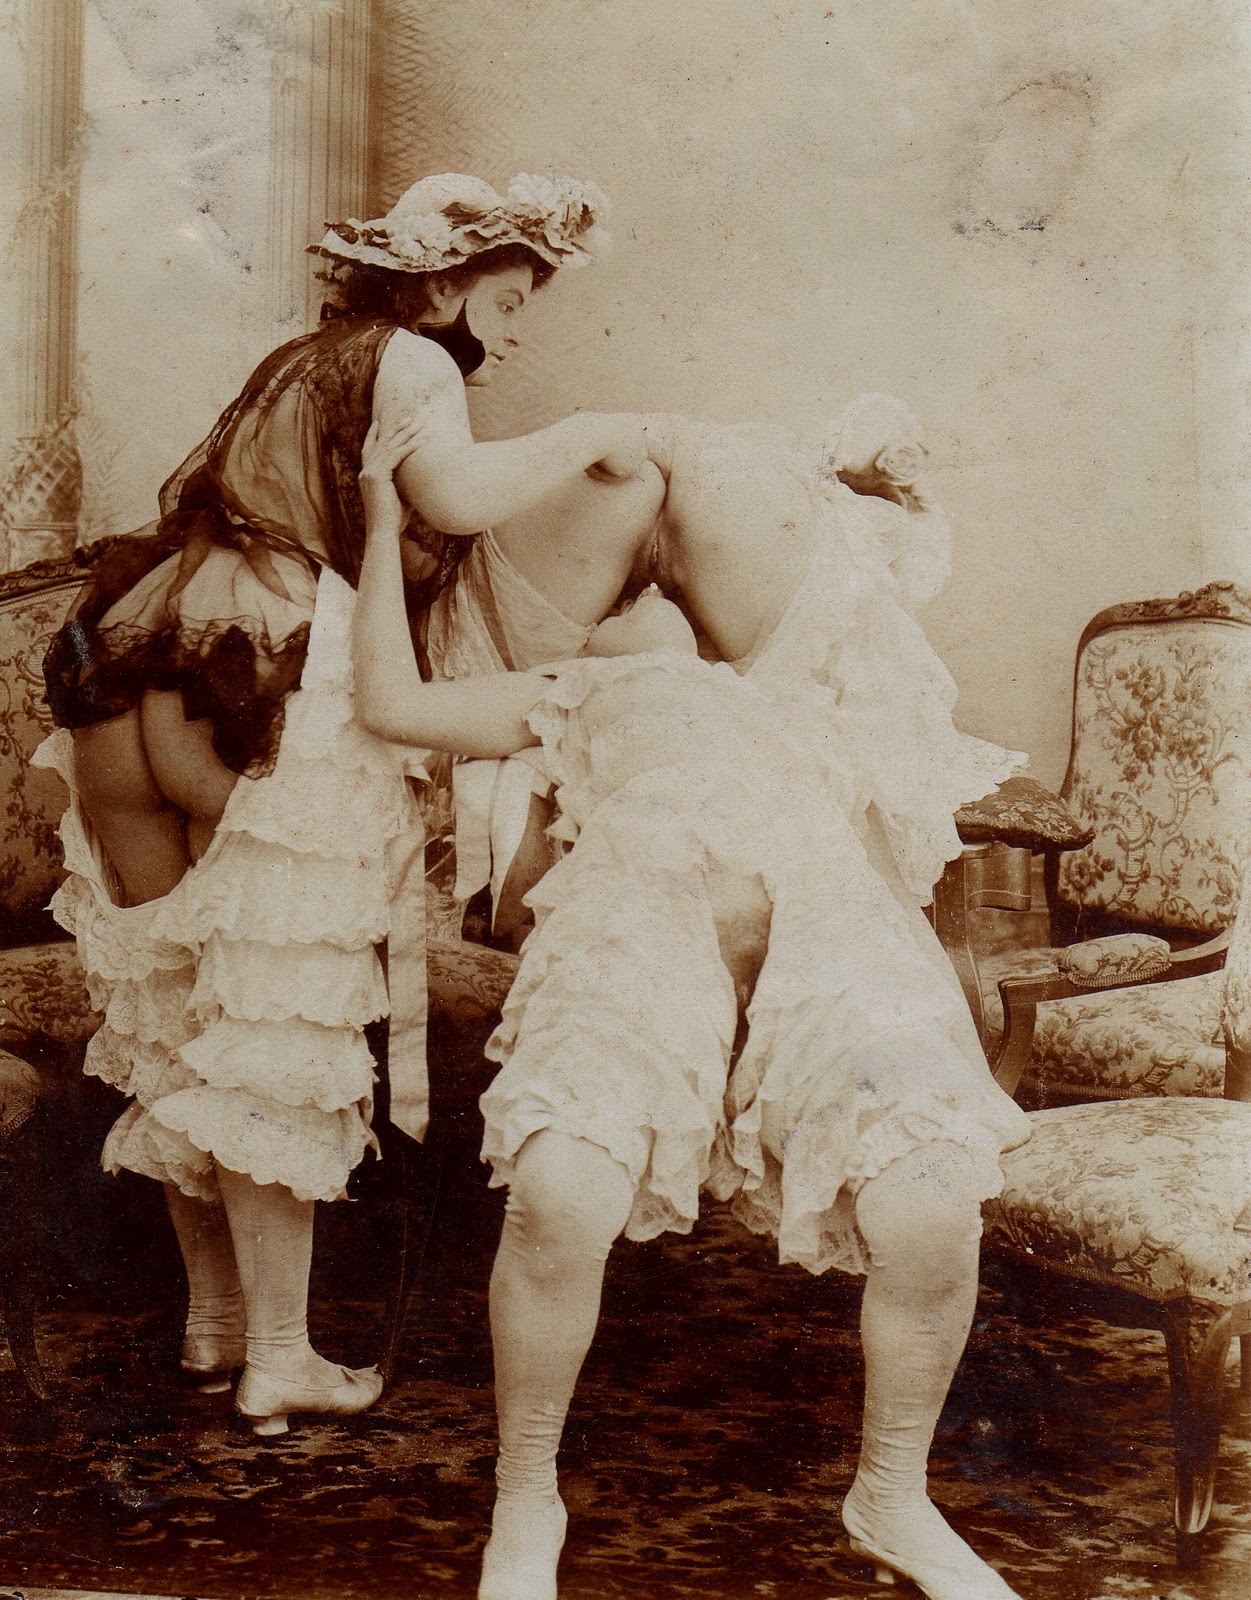 Antuqe 1800s - The Unbridled Joy of Victorian Porn - VICE